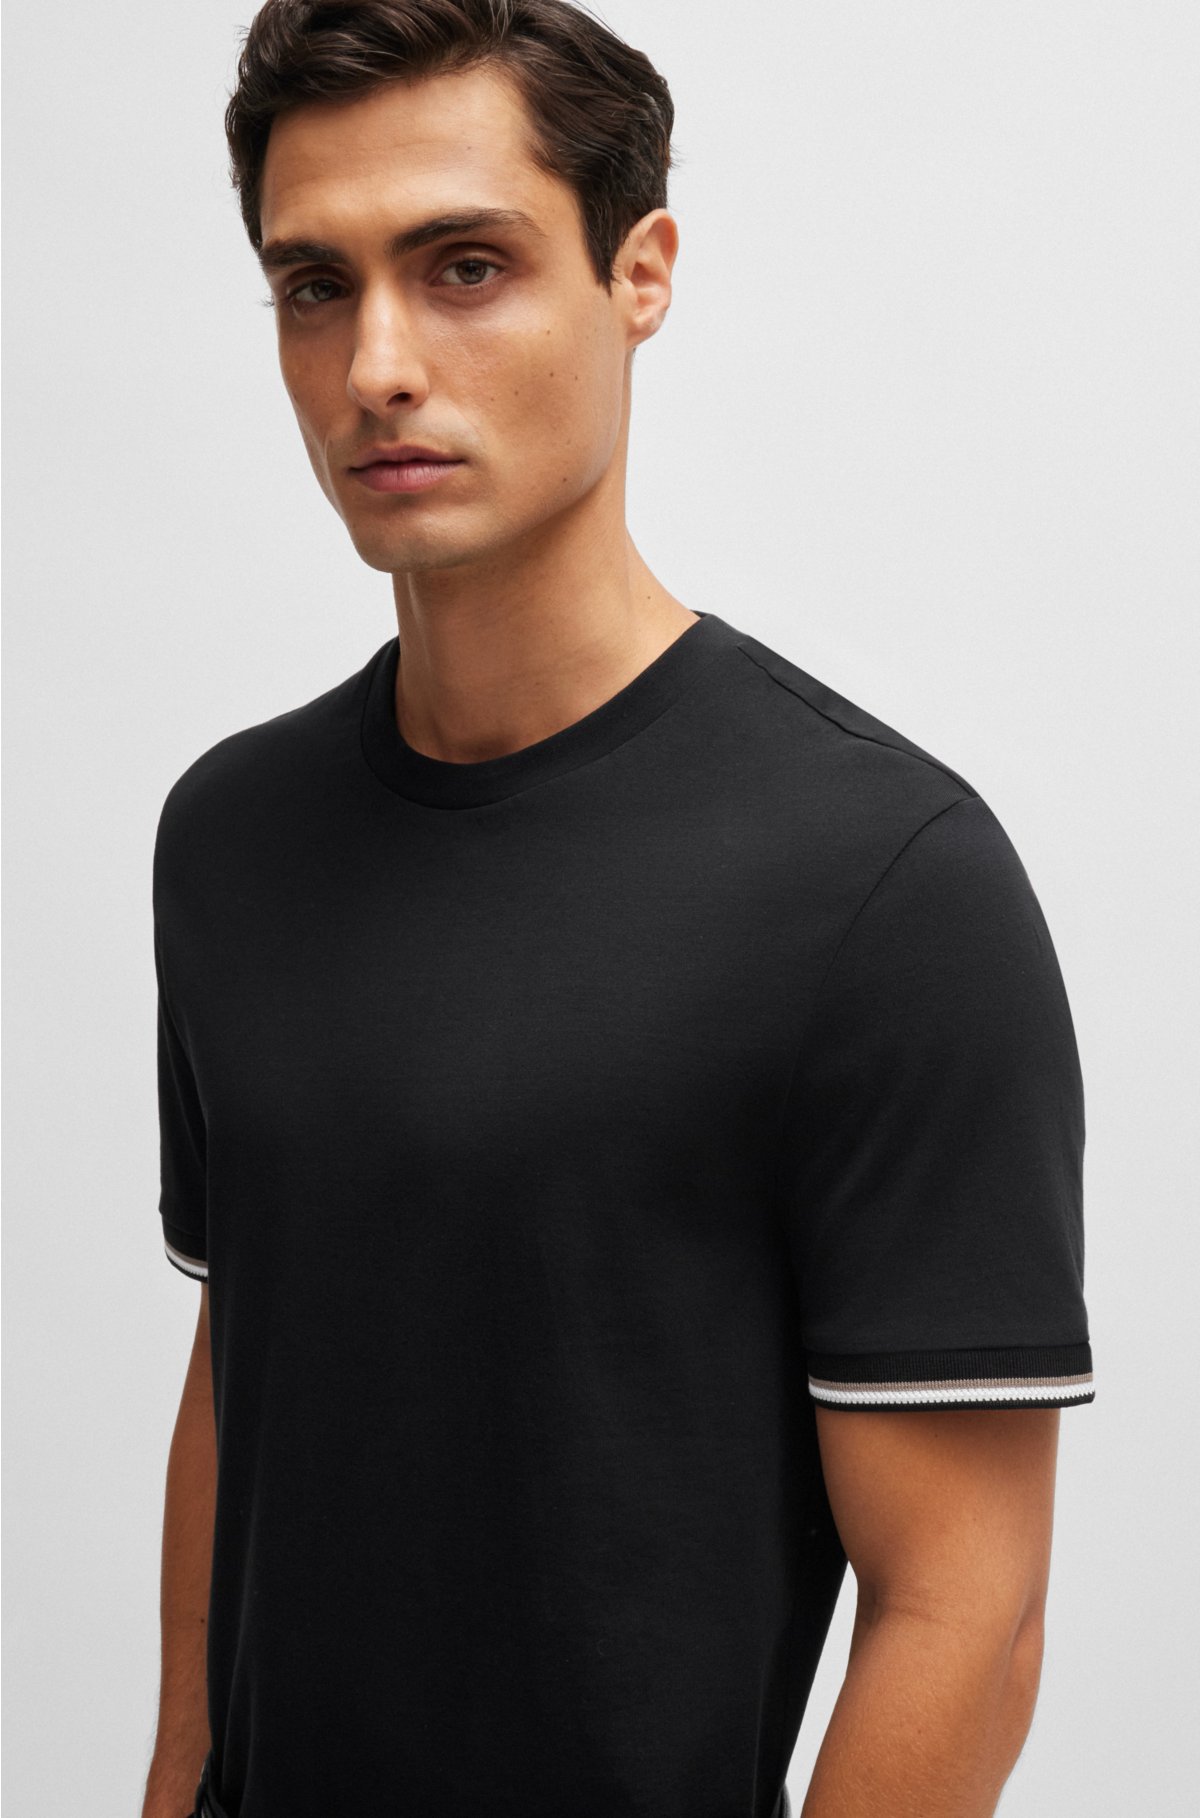 Cotton-jersey T-shirt with signature-stripe cuffs, Black